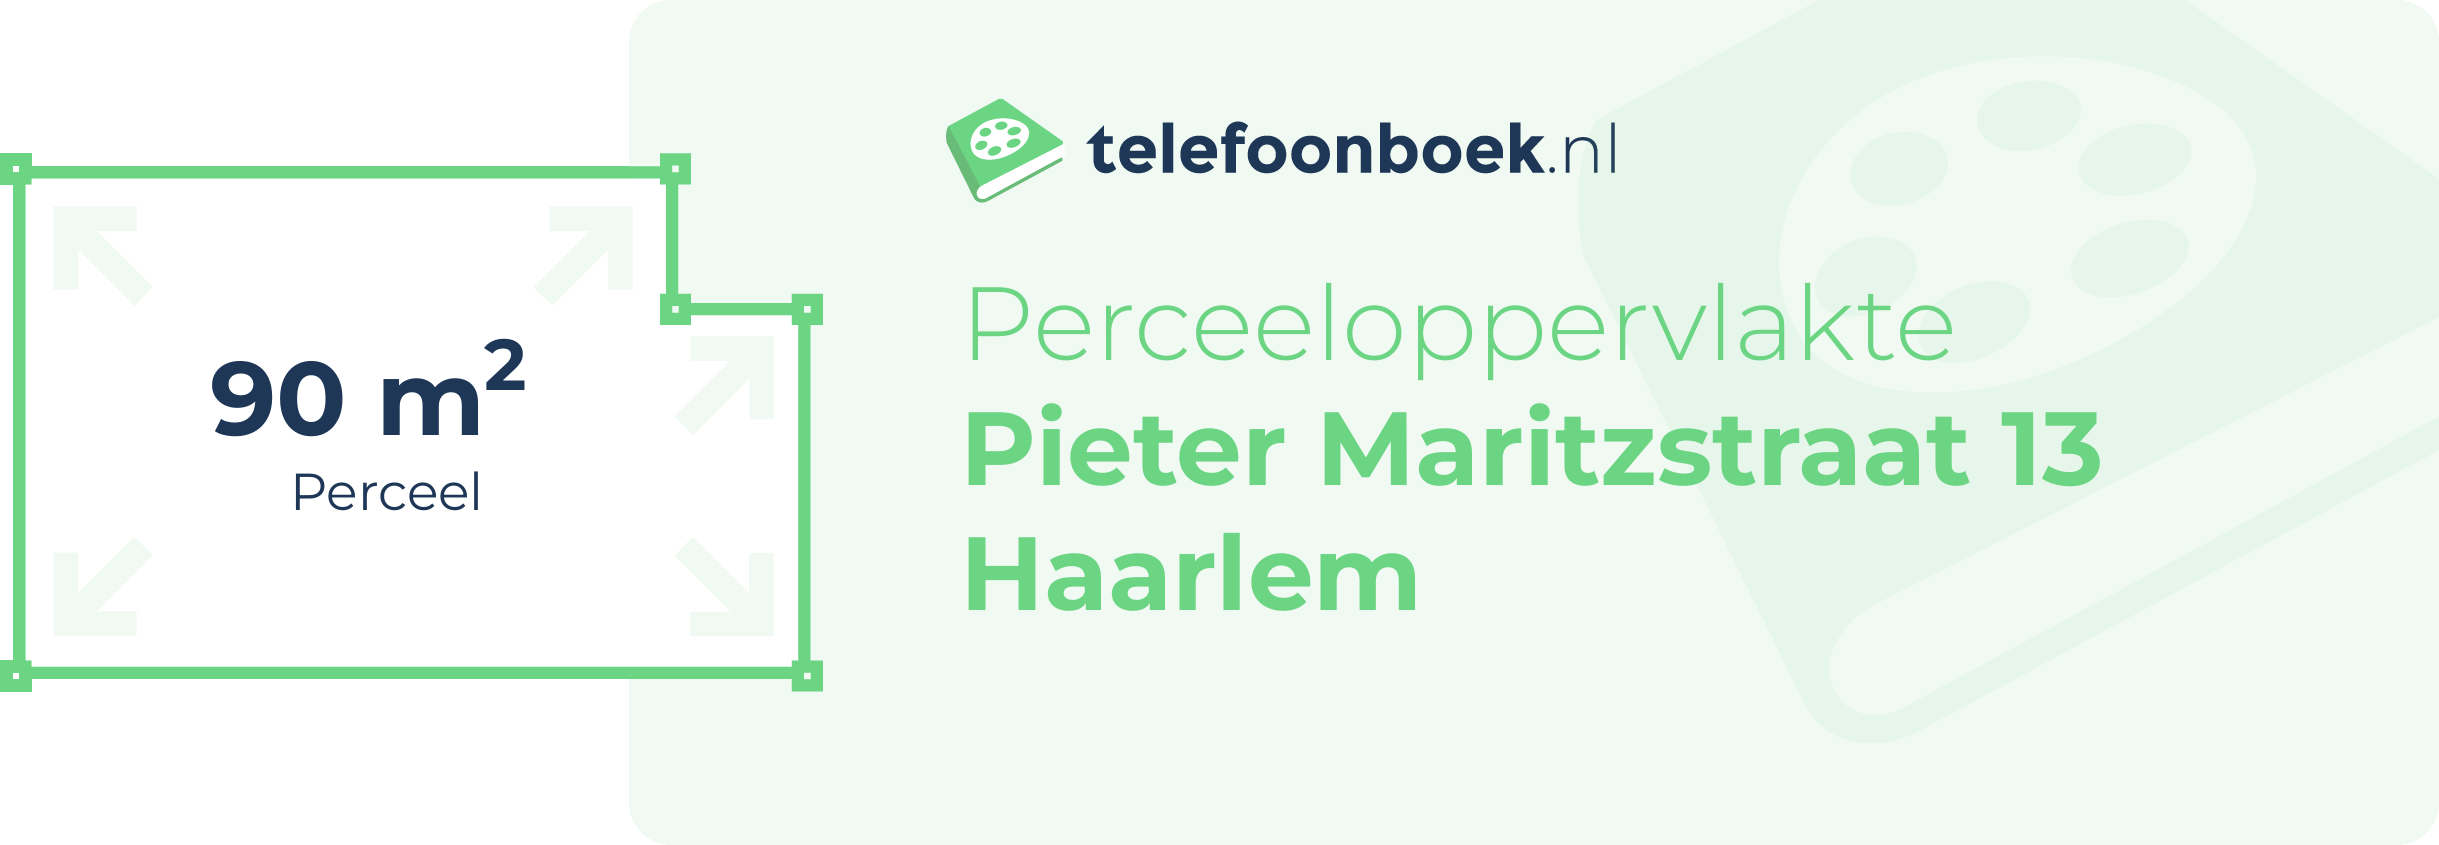 Perceeloppervlakte Pieter Maritzstraat 13 Haarlem